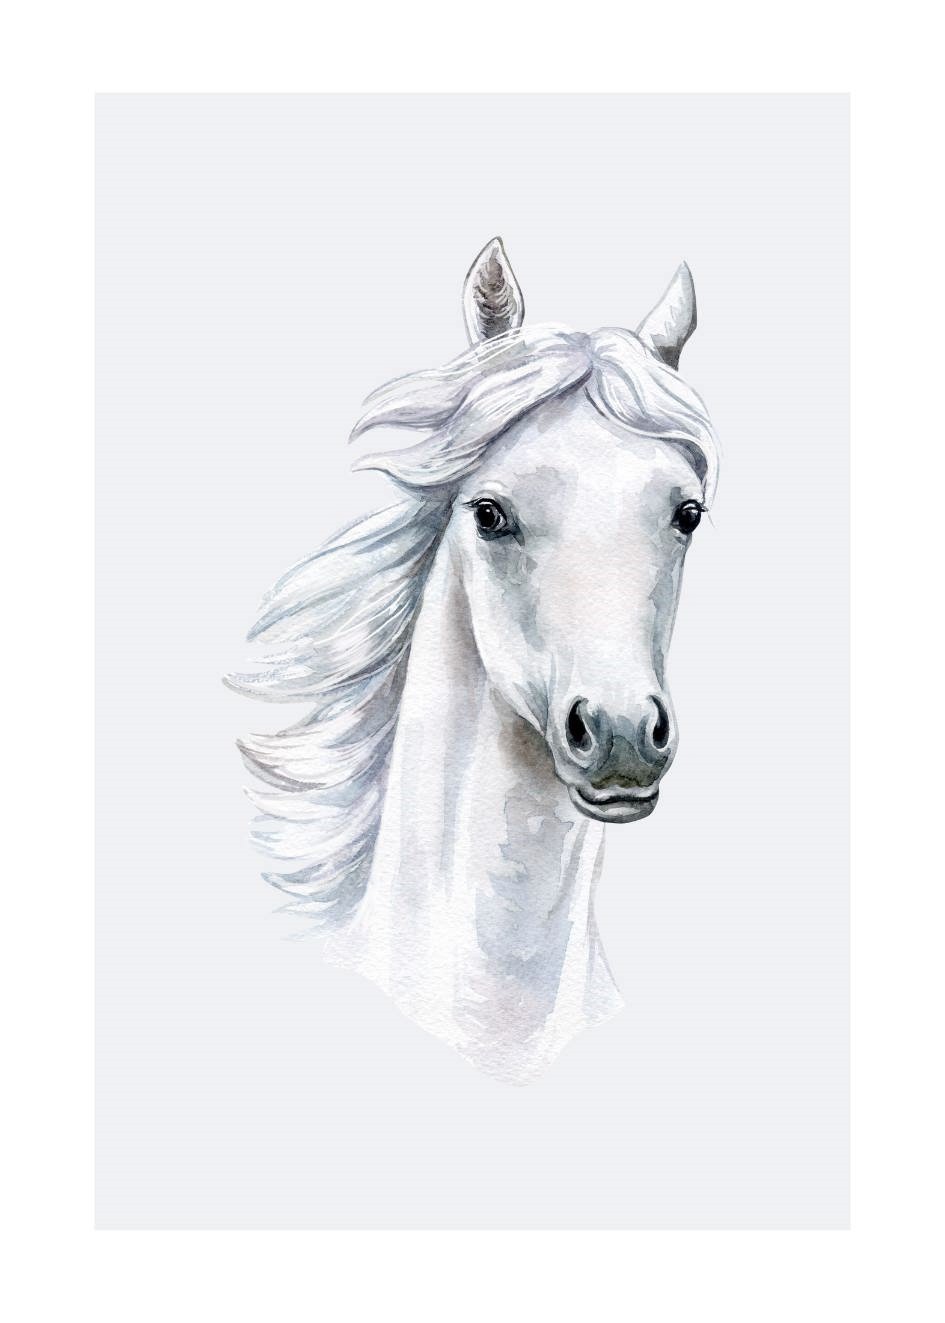 Plakat z koniem